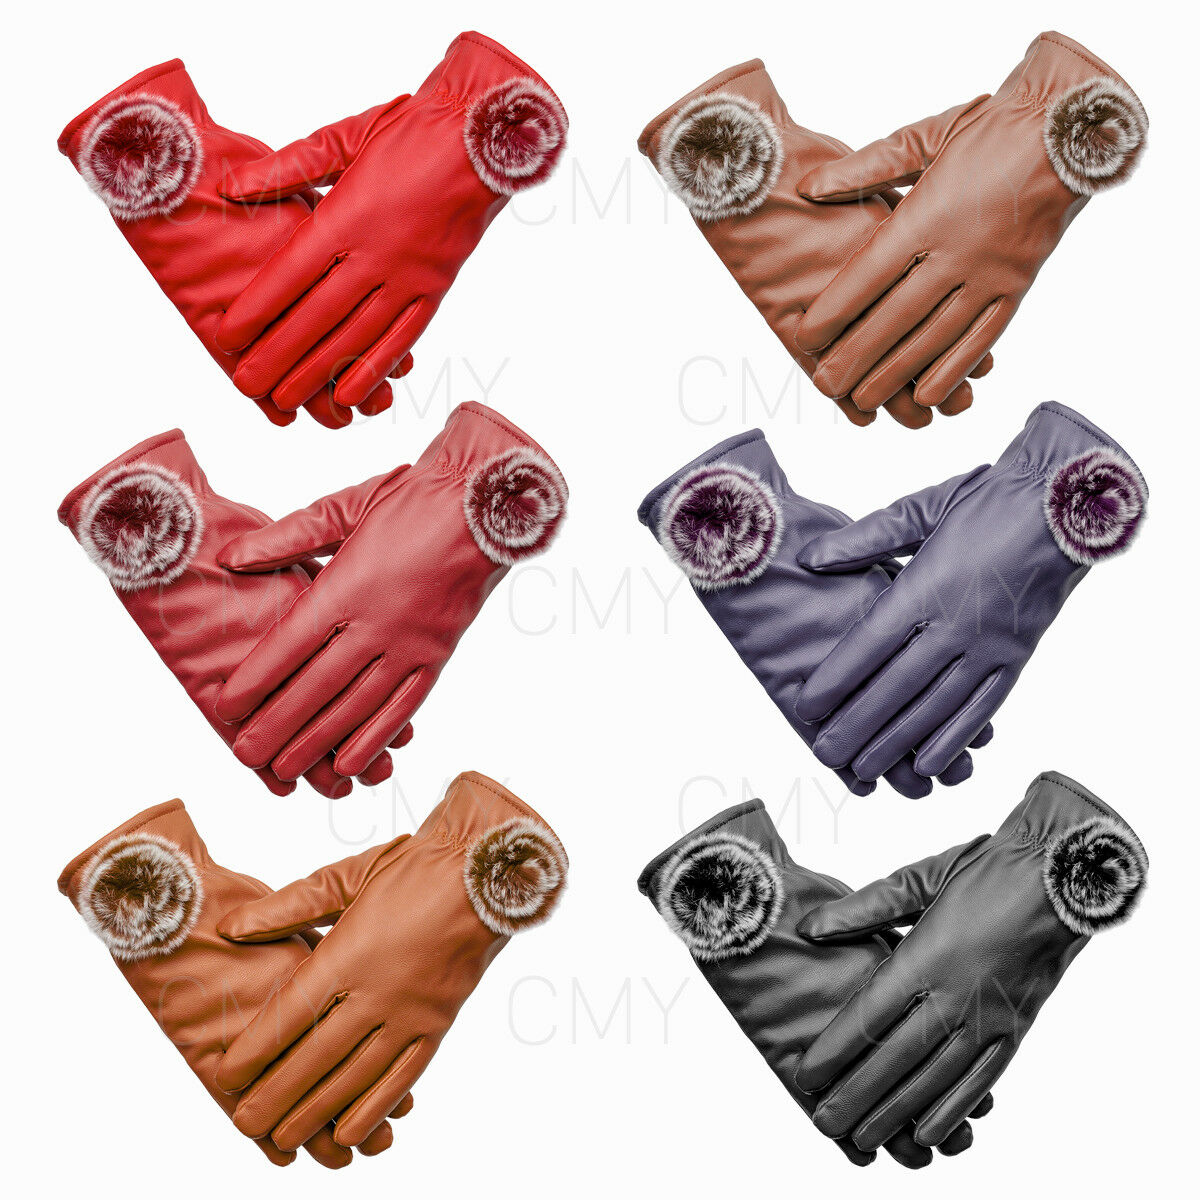 Fashion Women/'s Winter Gloves Soft Leather Warm Touch Screen Anti-Slip Mittens